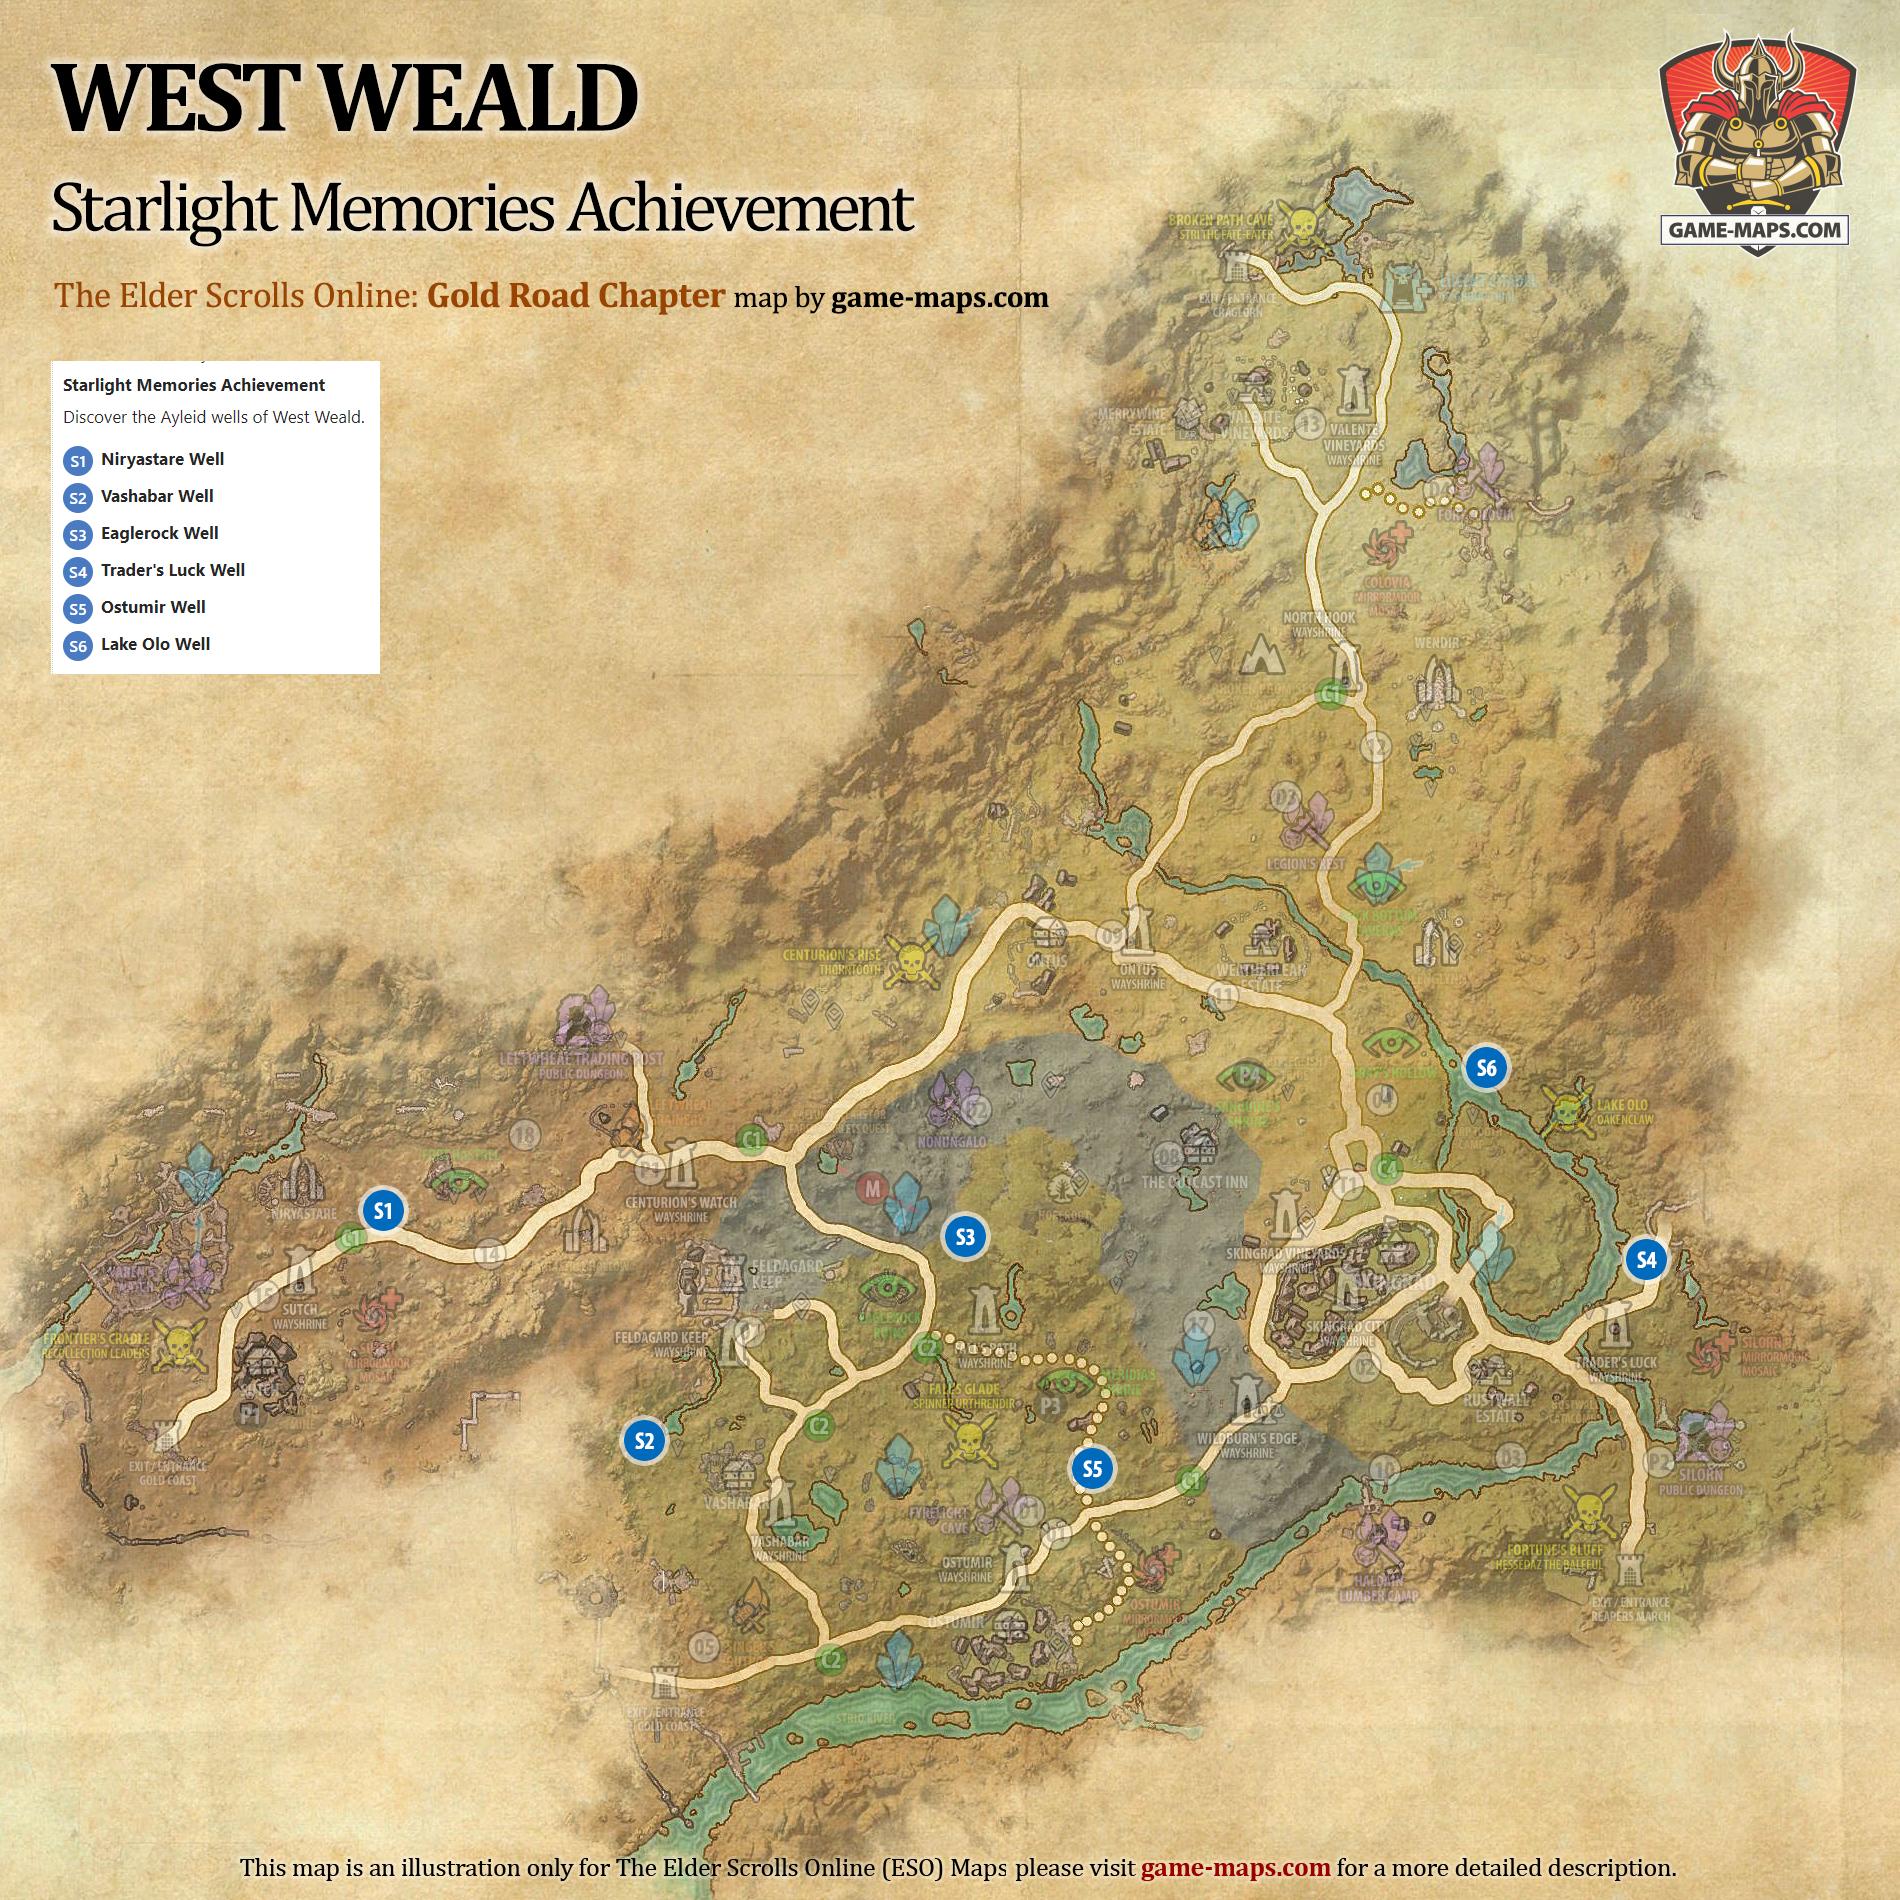 Starlight Memories in West Weald The Elder Scrolls Online: Gold Road (ESO)